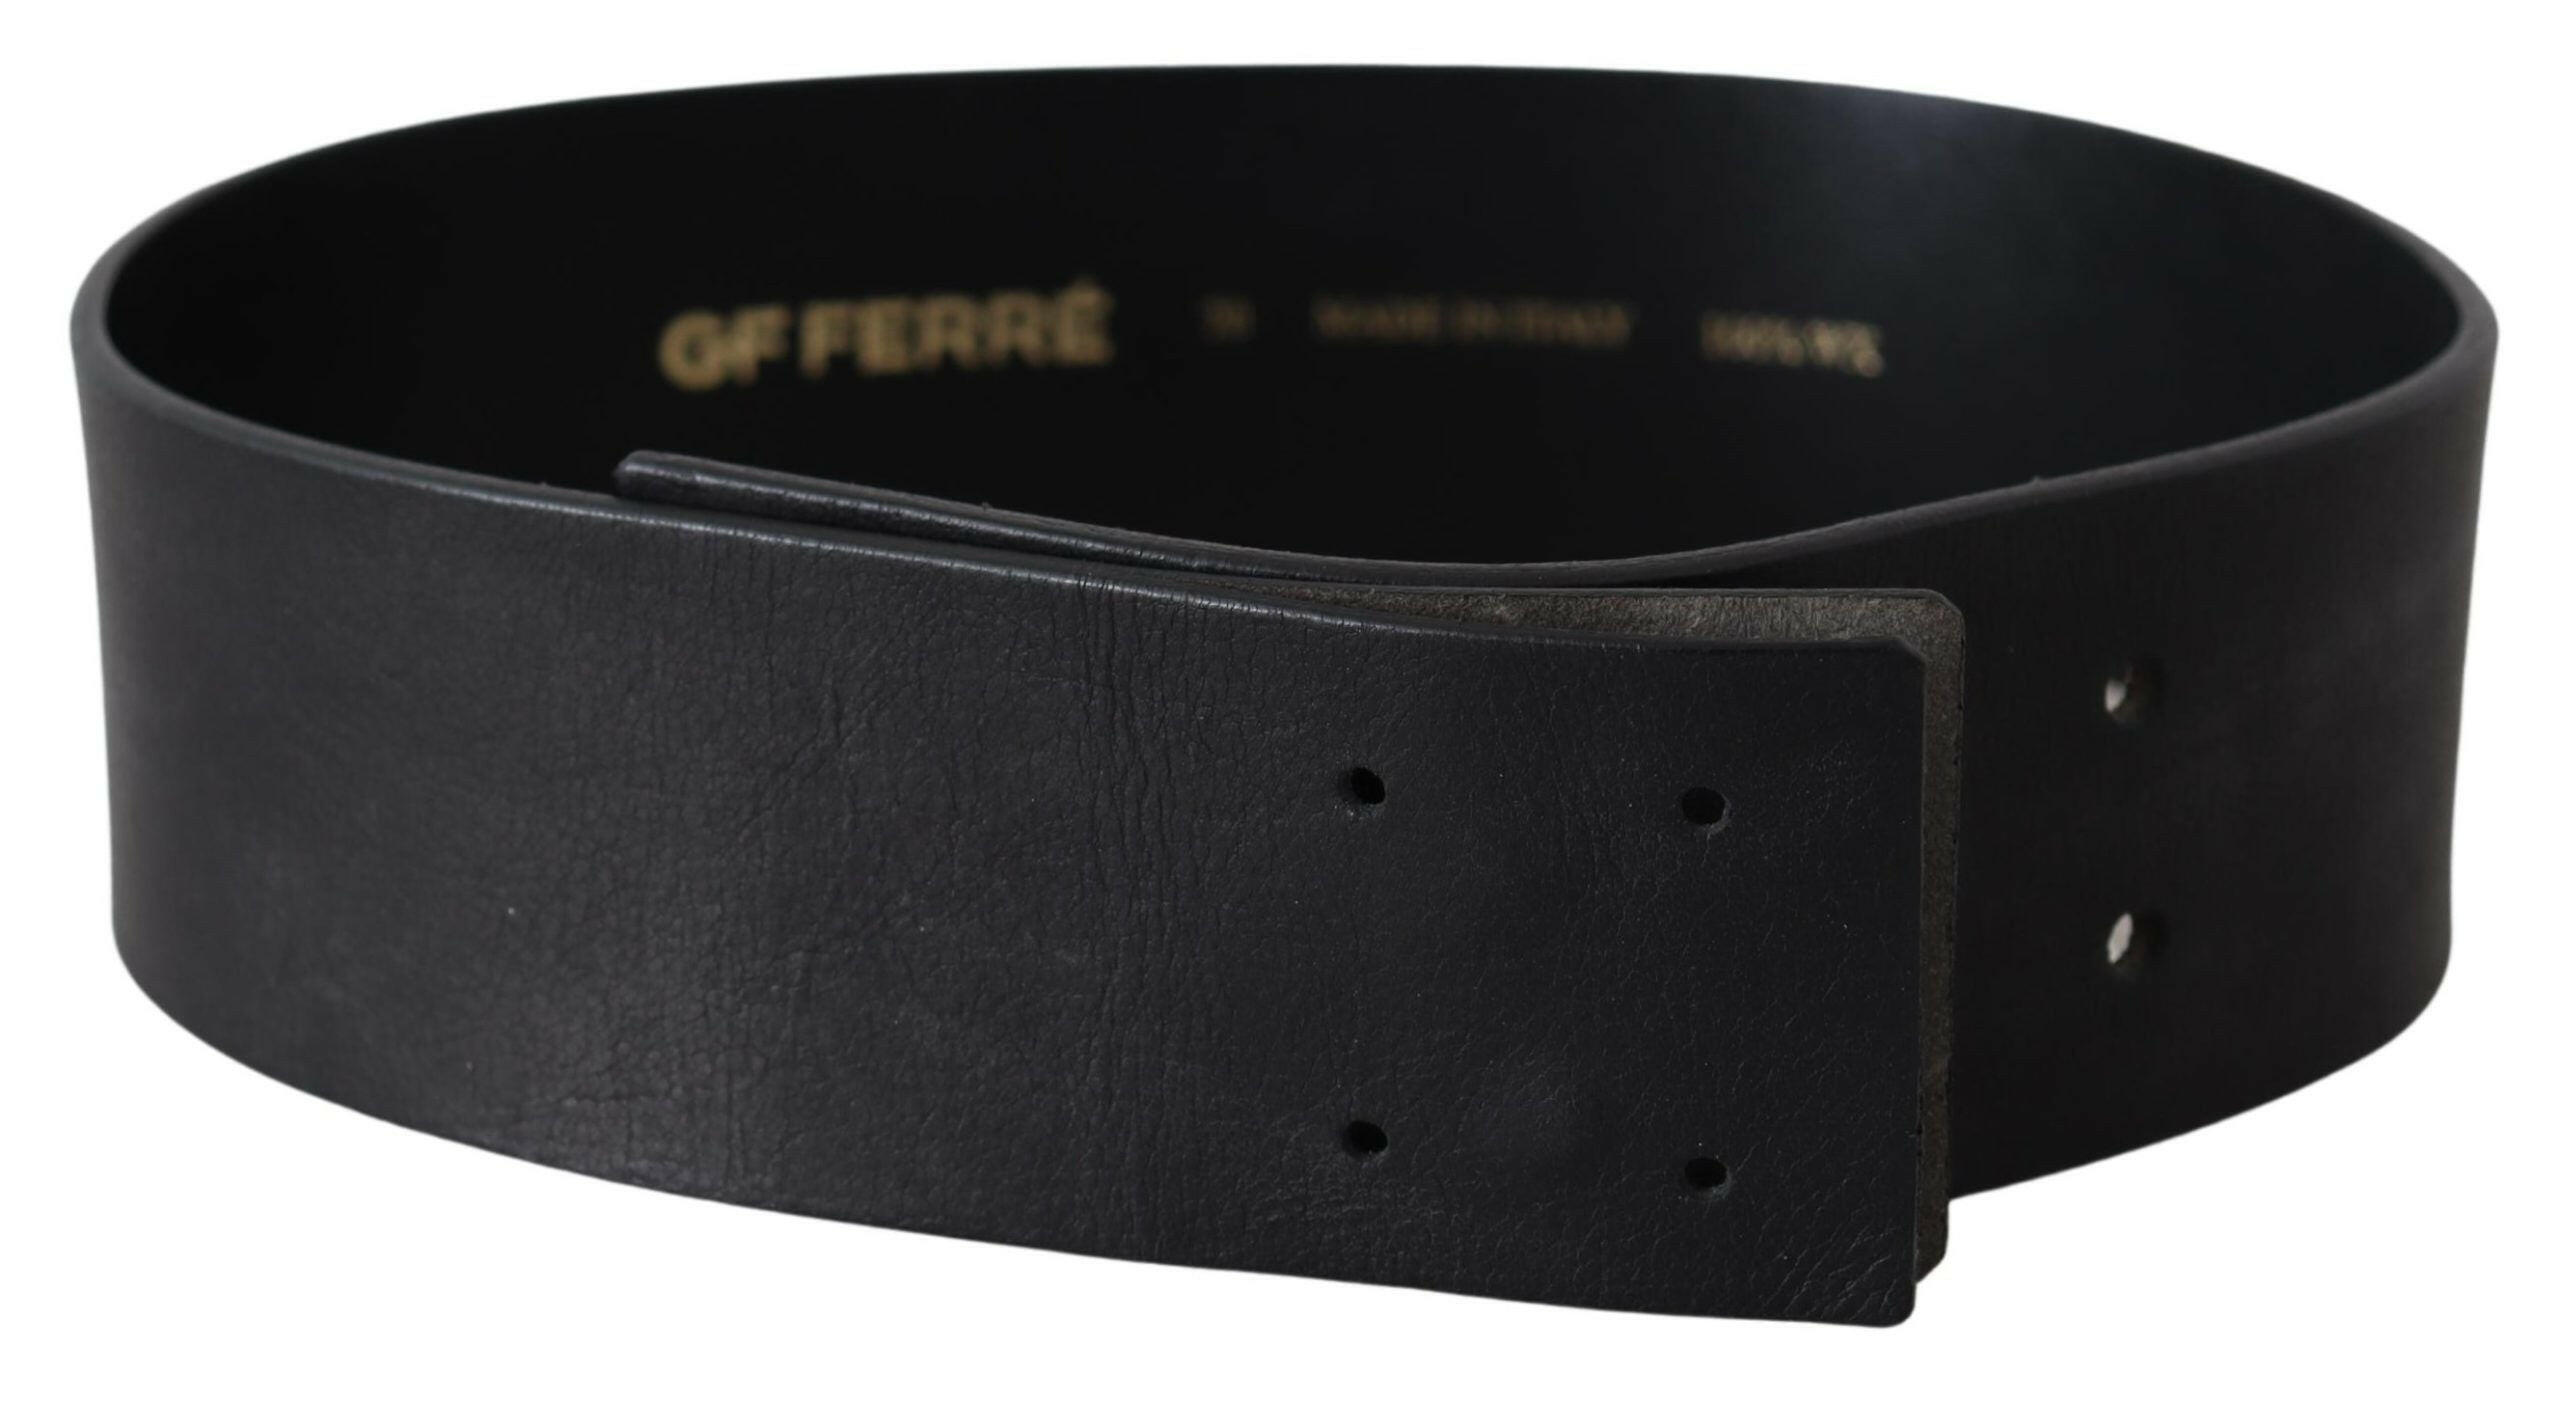 GF Ferre Black Genuine Leather Wide Logo Waist Belt - GENUINE AUTHENTIC BRAND LLC  